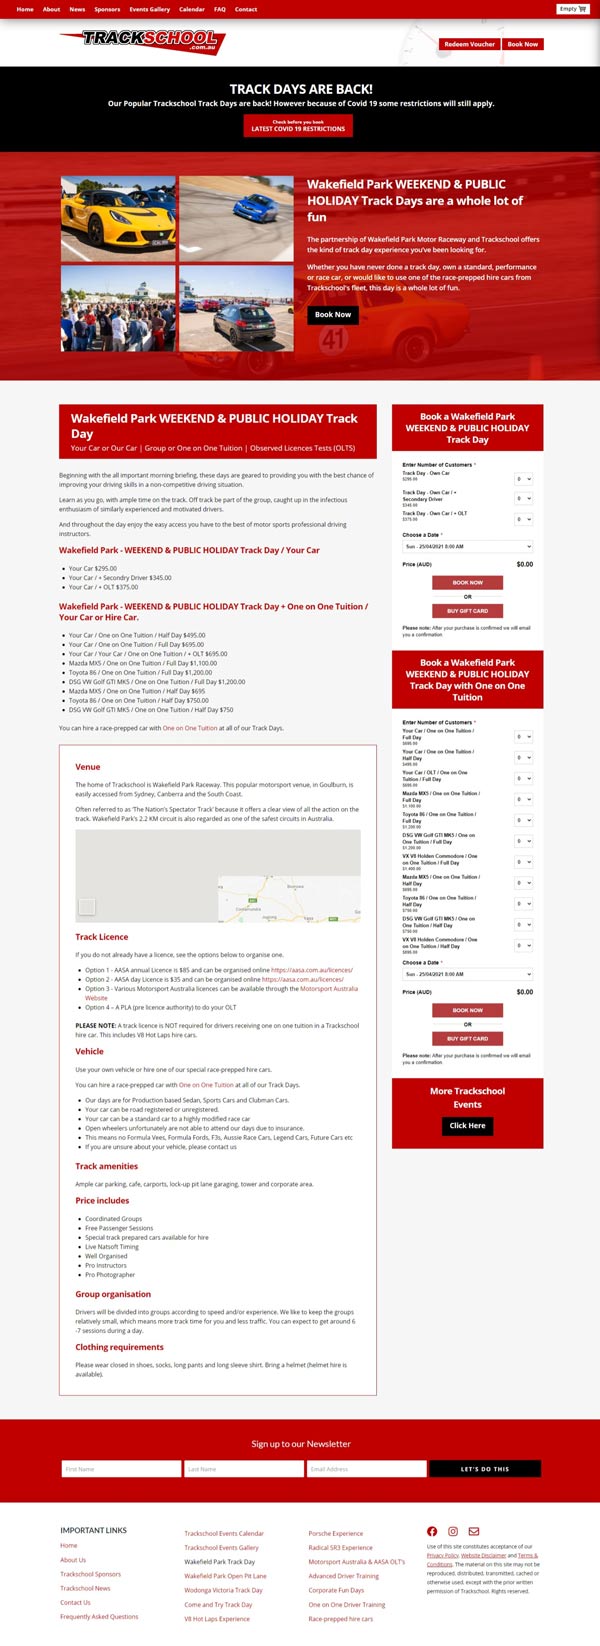 Trackschool website designed by Big Red Bus Websites - example 2